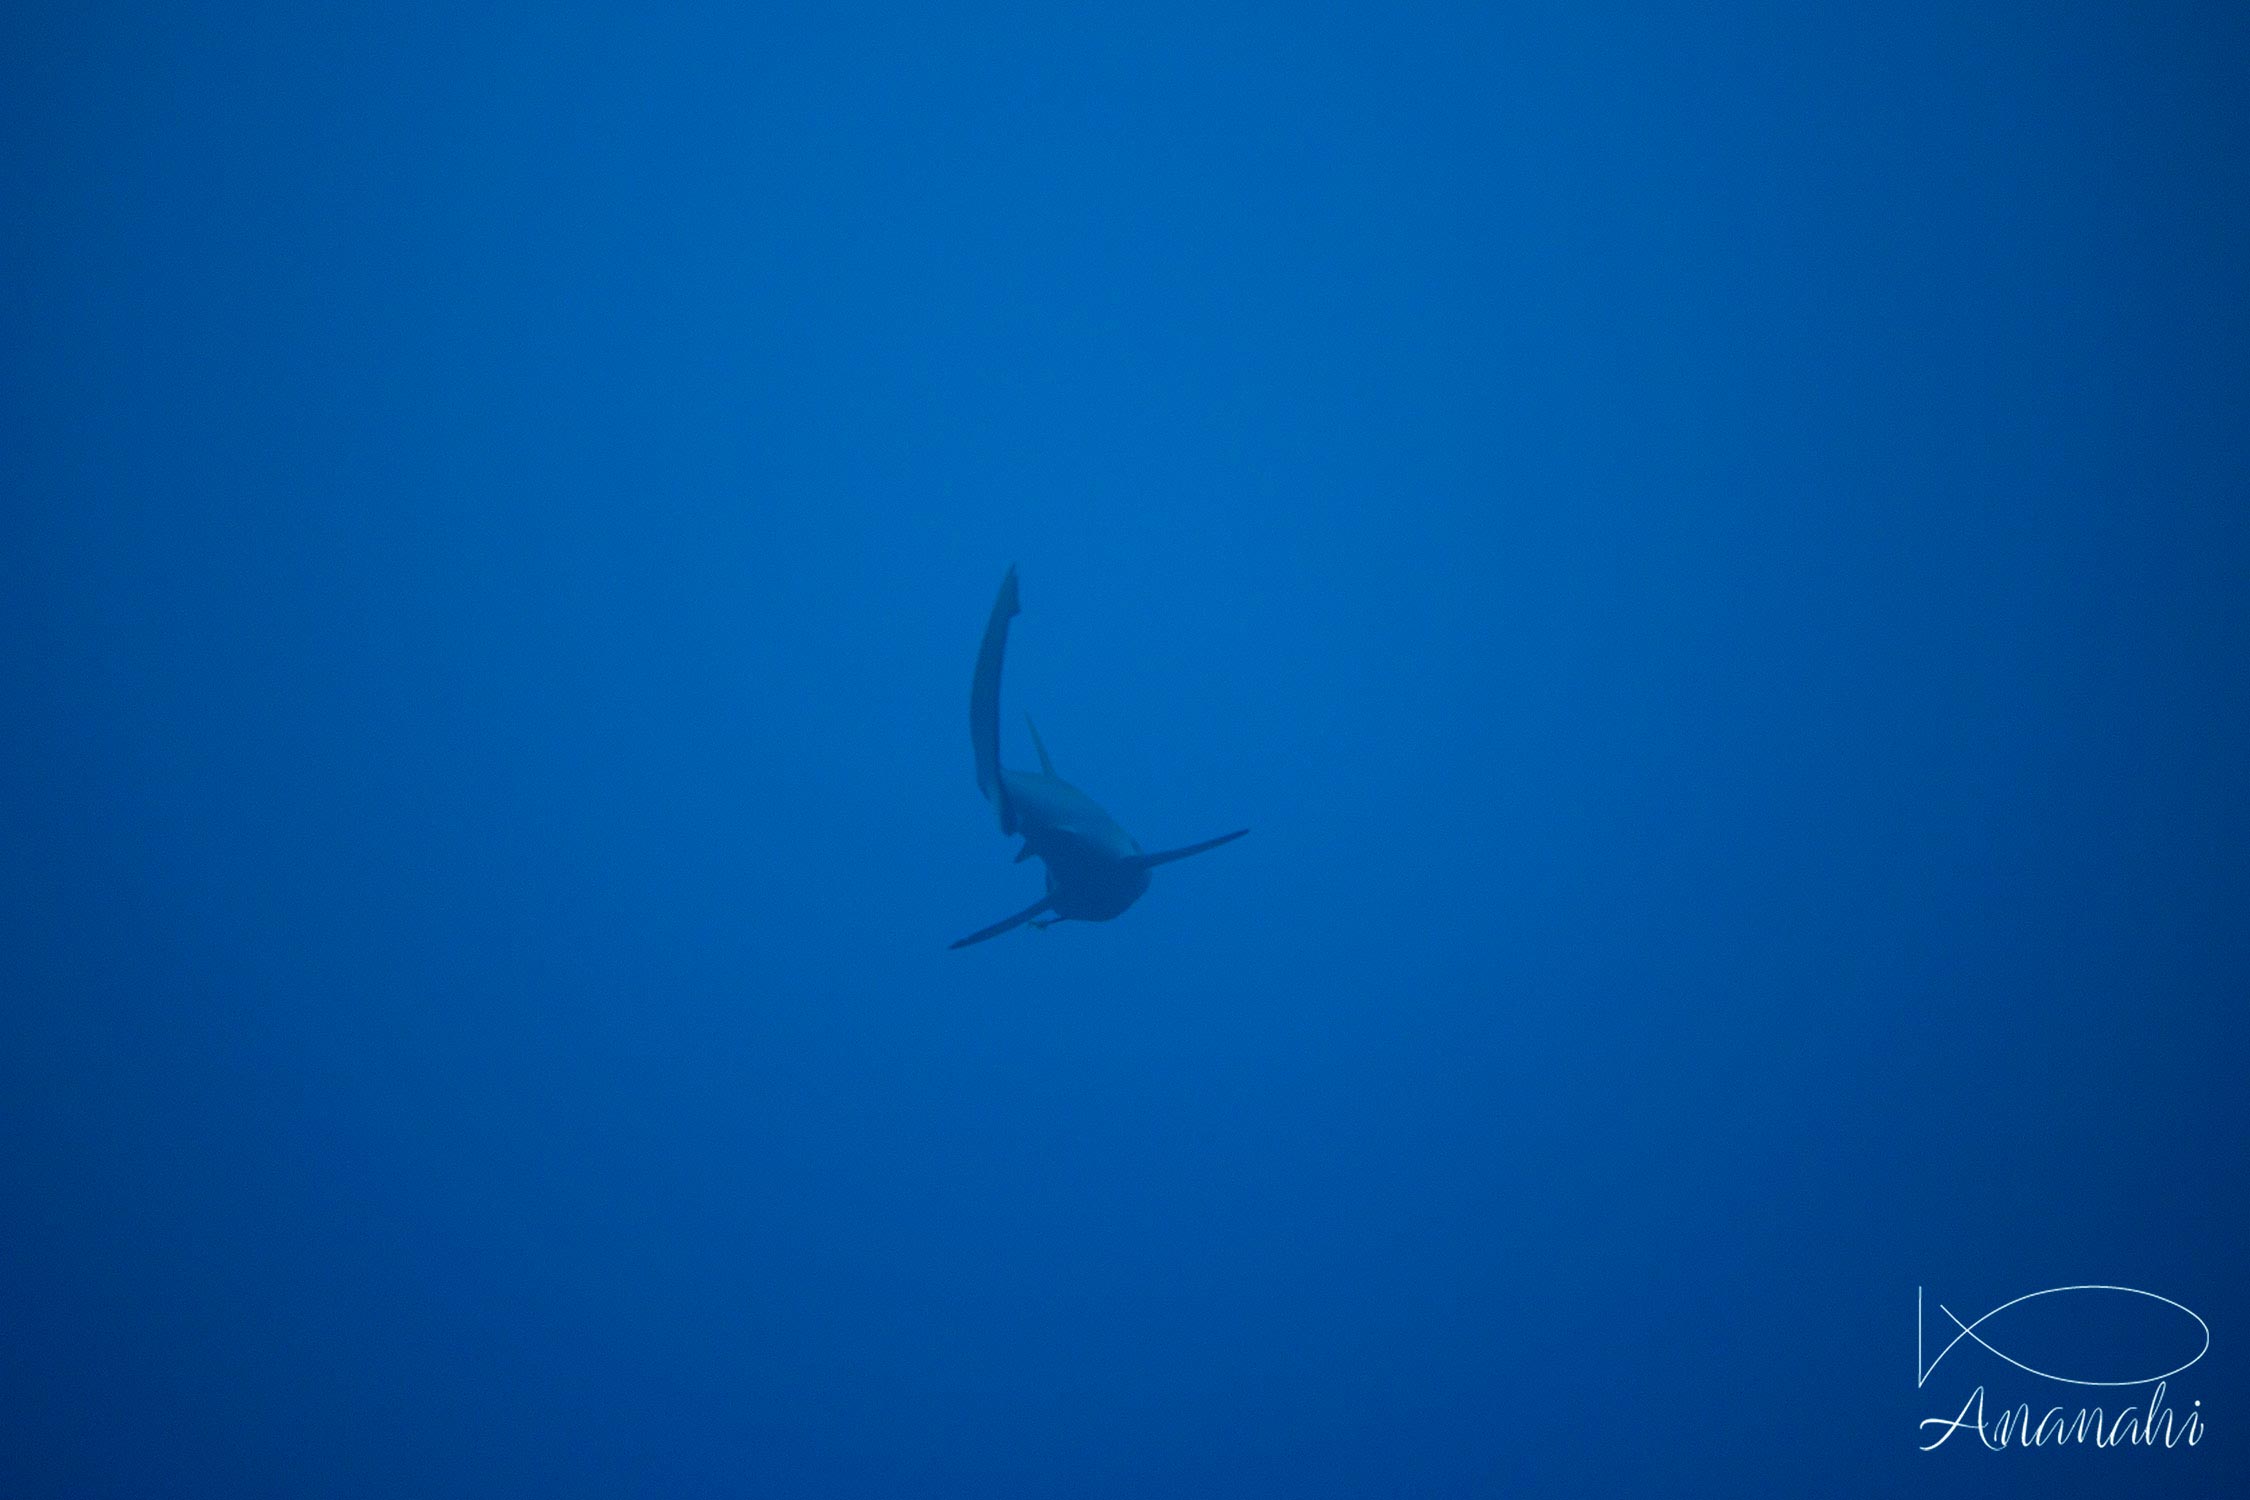 Grey reef shark of Maldives